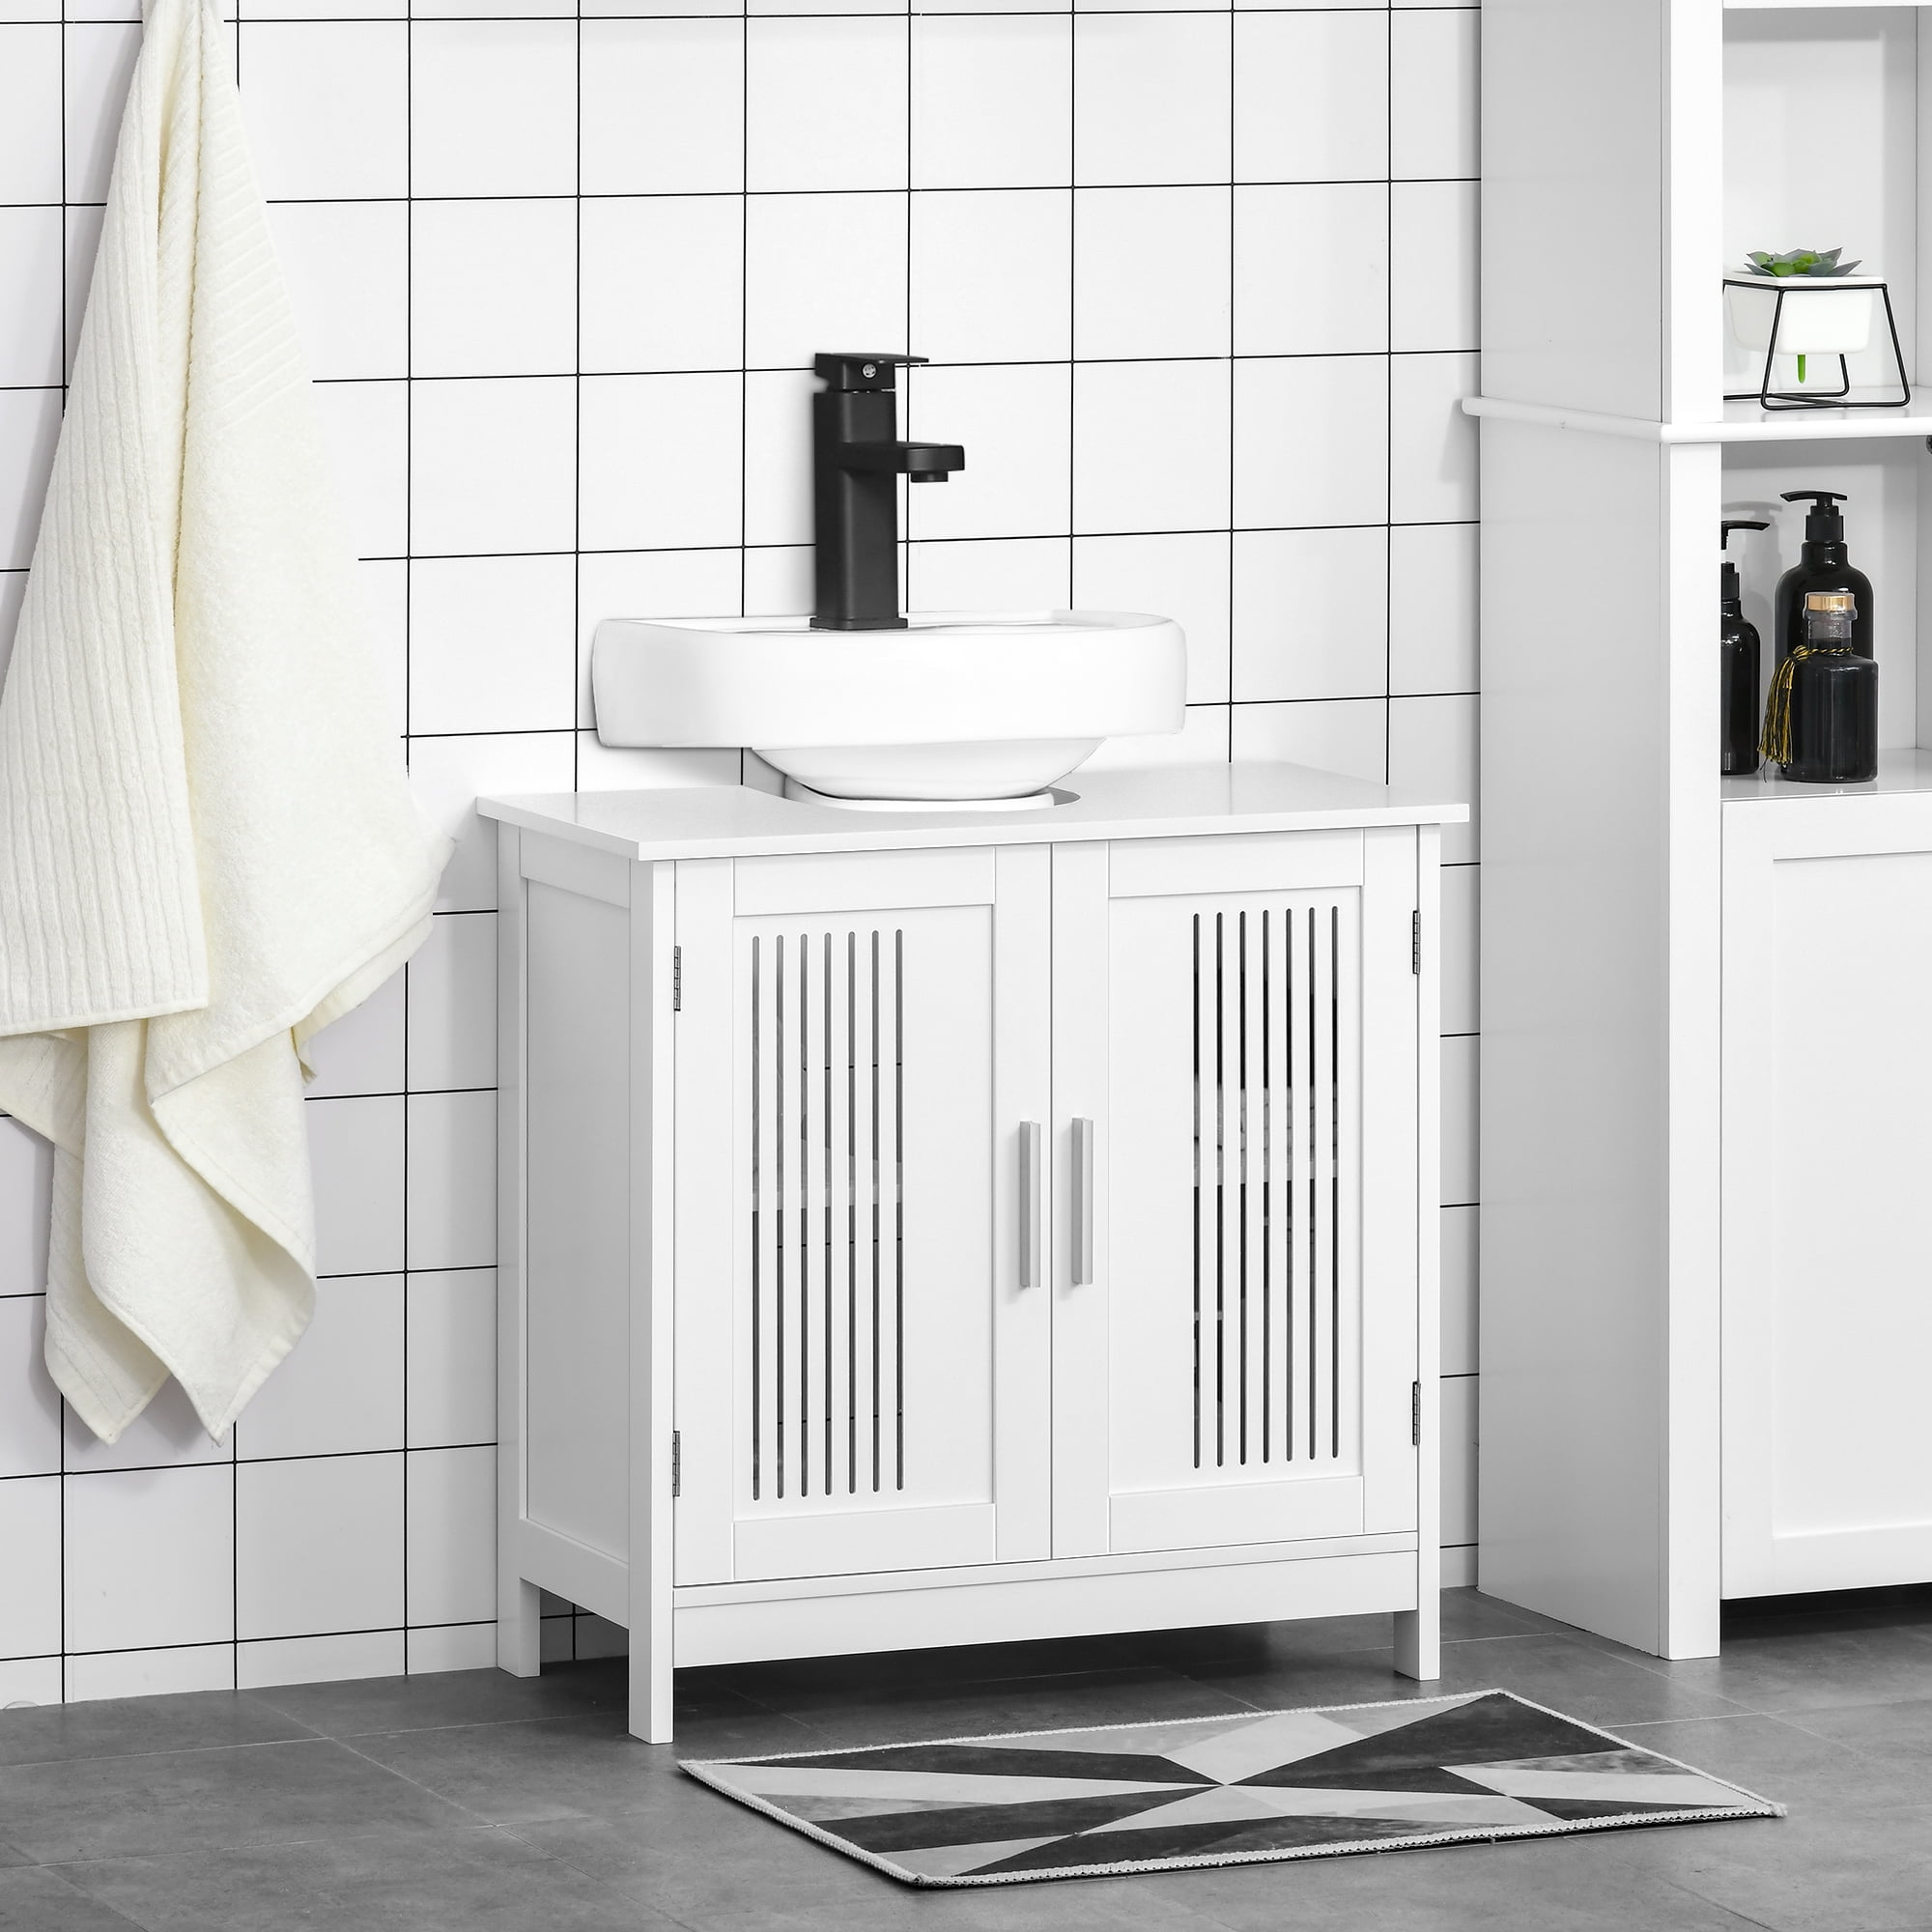  kleankin Pedestal Sink Storage Cabinet, Under Sink Cabinet, Bathroom  Vanity Cabinet with U-Shape and Adjustable Internal Shelf, White : Tools &  Home Improvement